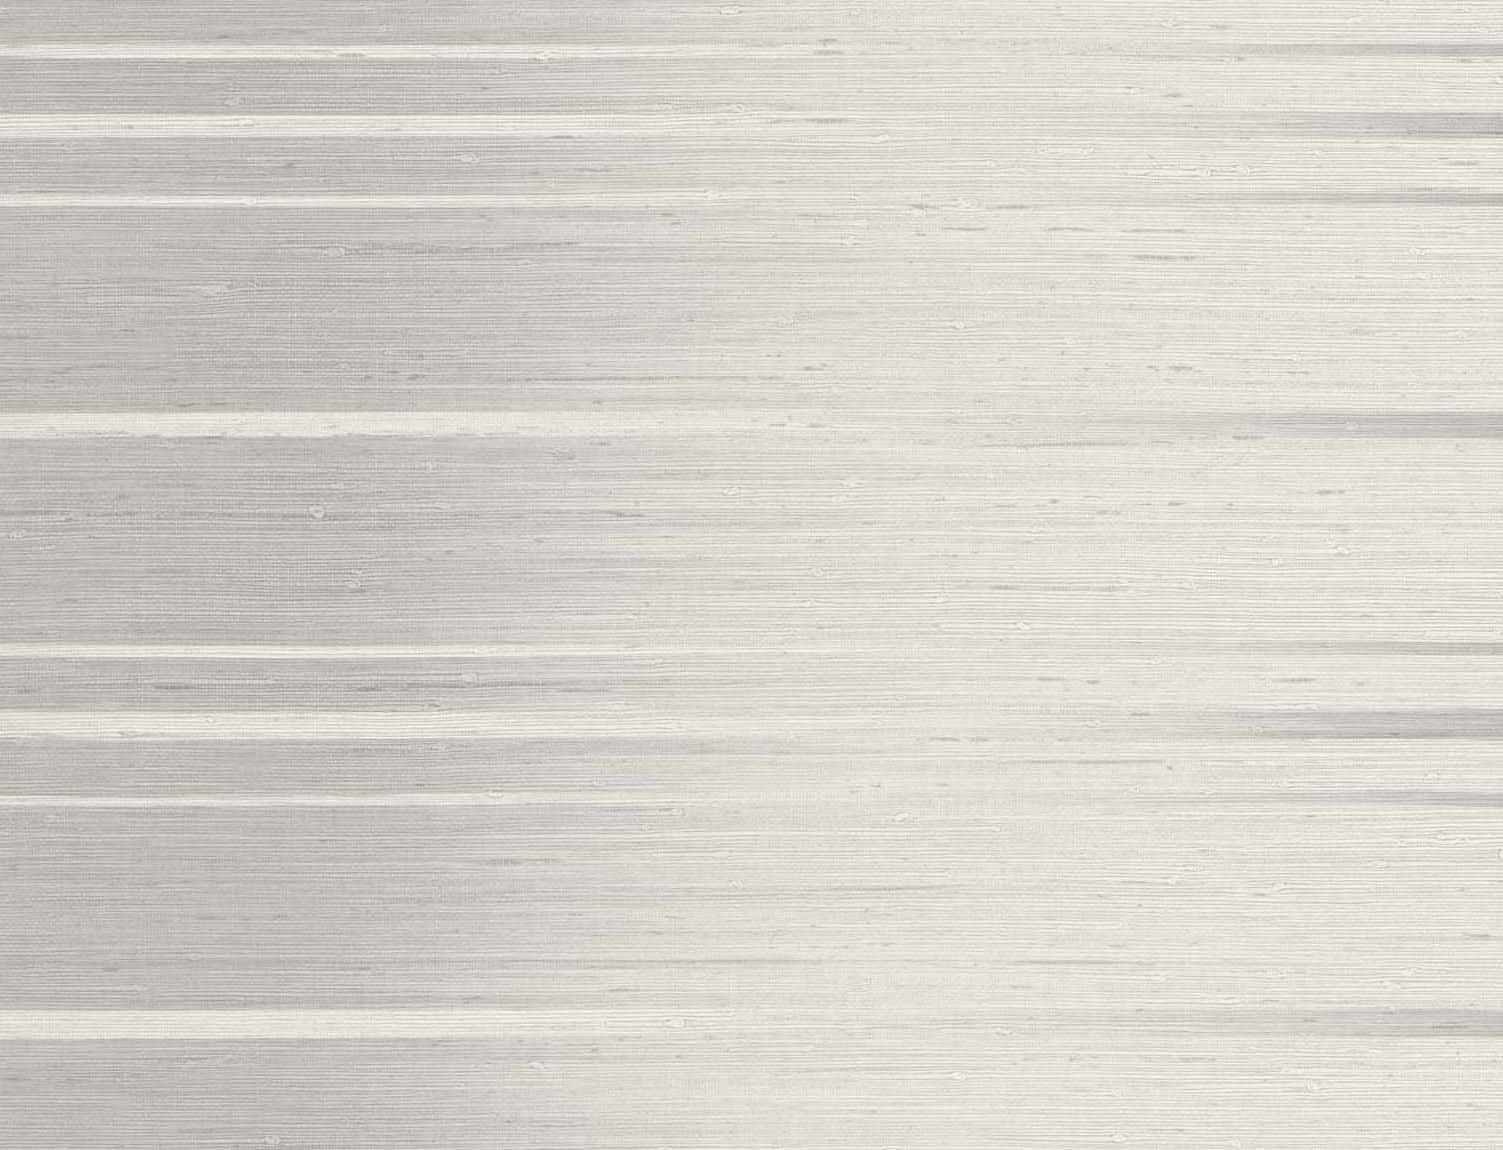 Seabrook Designs TS80608 Even More Textures Horizon Ombre  Wallpaper Evaporation